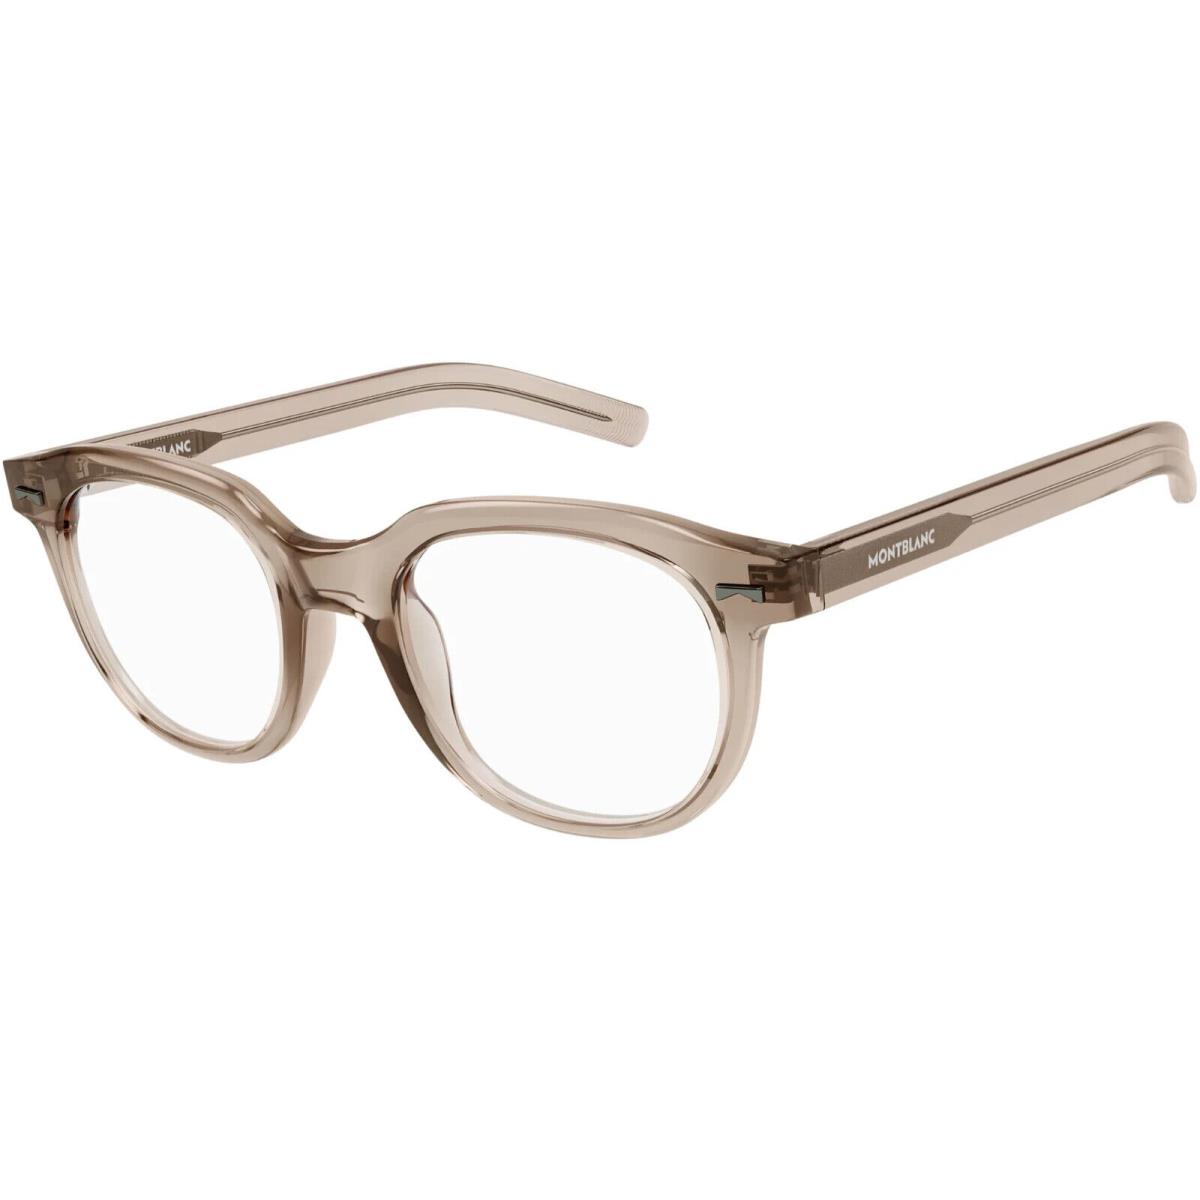 Montblanc Rectangular Eyeglasses MB0261o-004-50 Brown Frame Clear Lenses